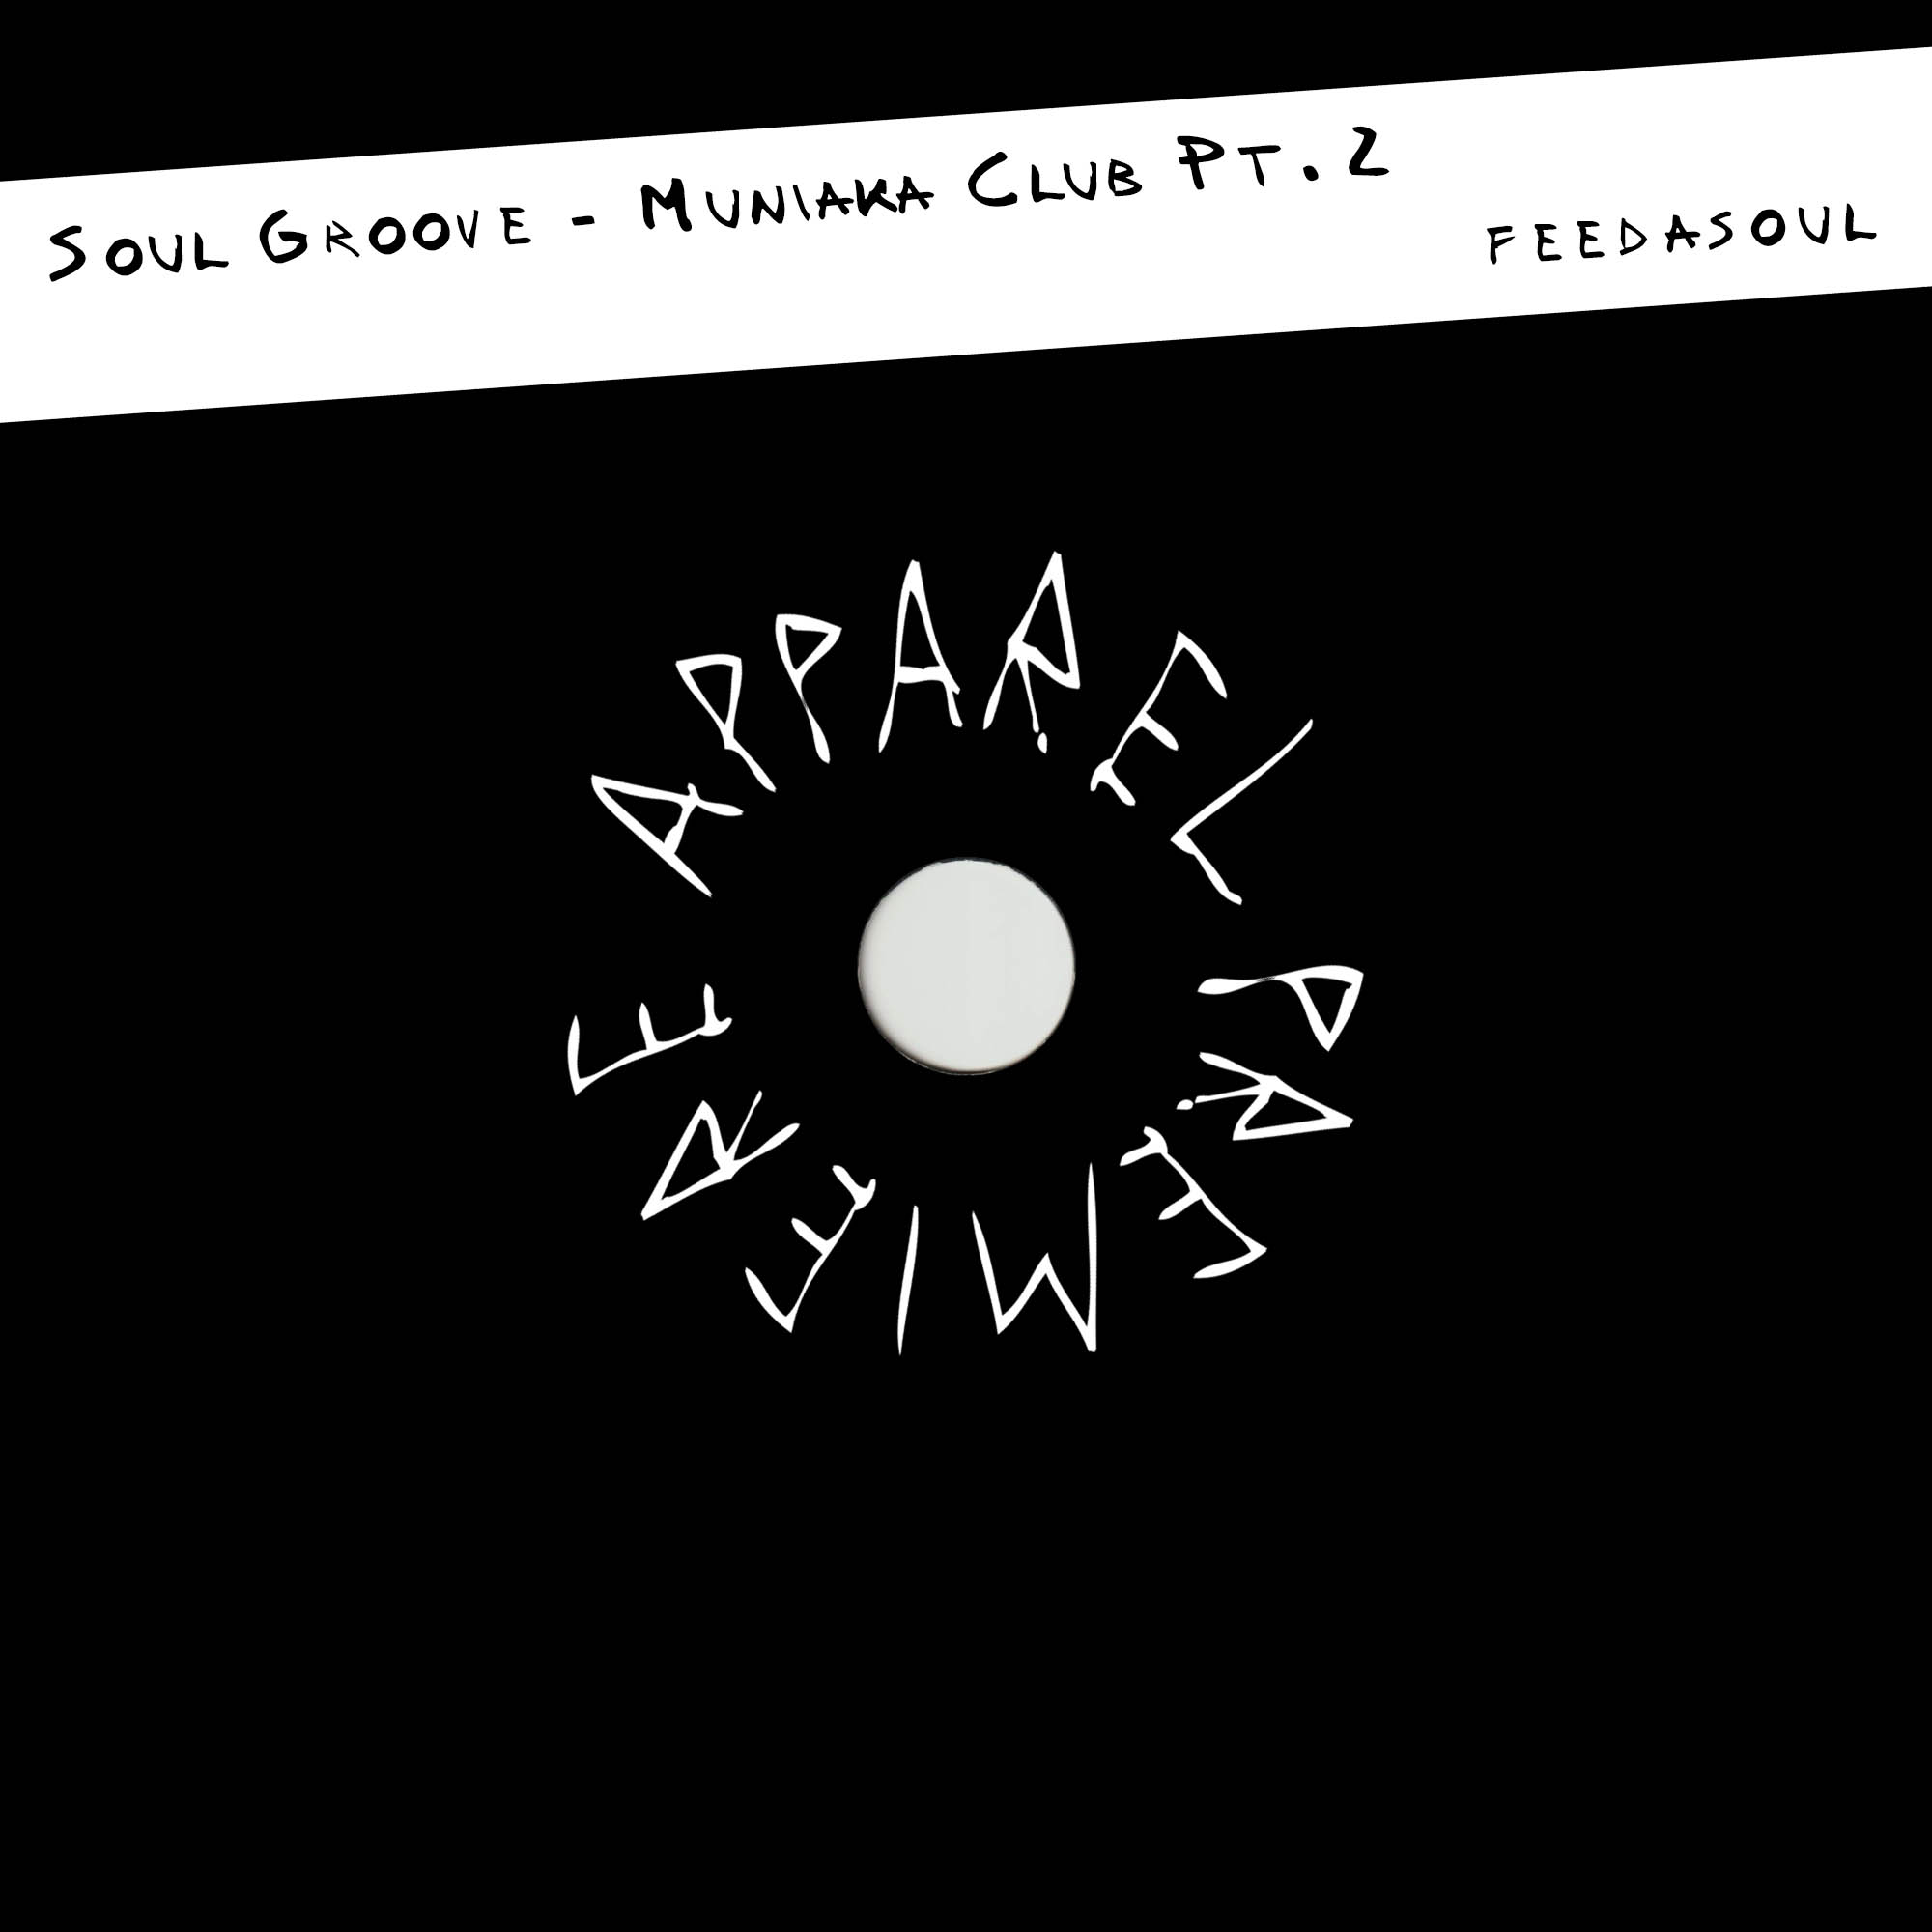 APPAREL PREMIERE Soul Groove – Muniaka Club Pt. 2 [Feedasoul]